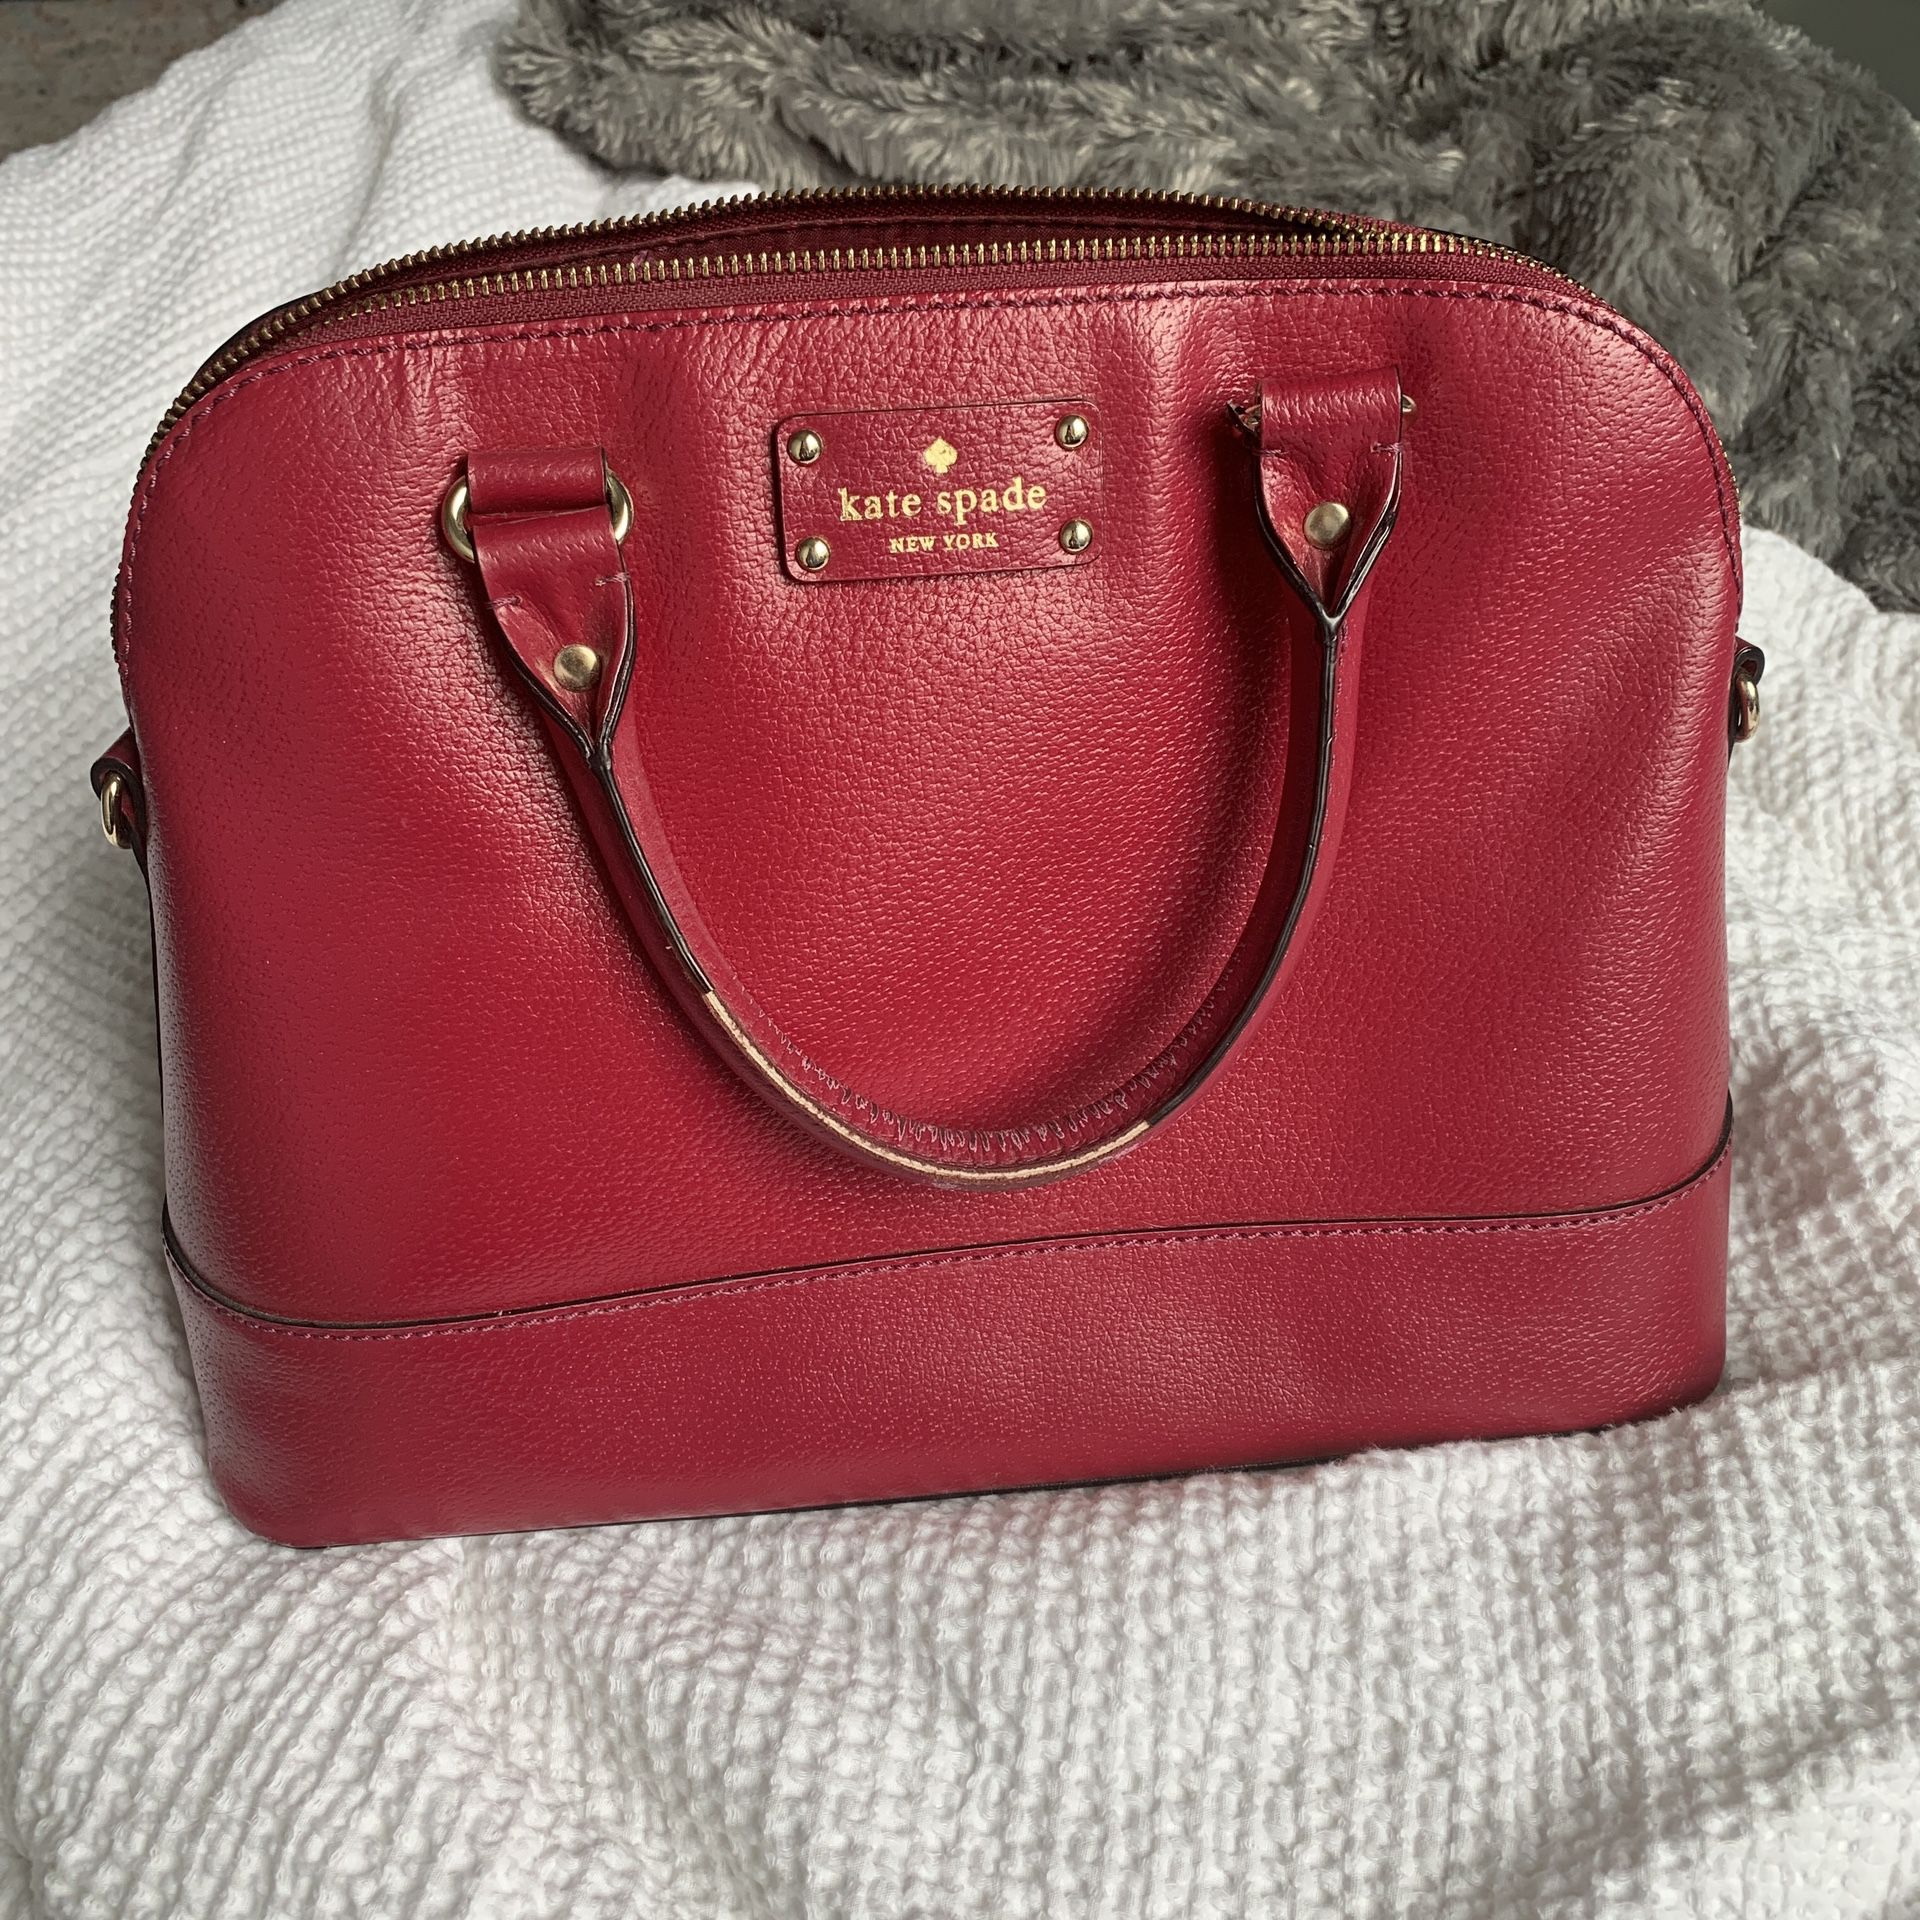 Kate spade red purse